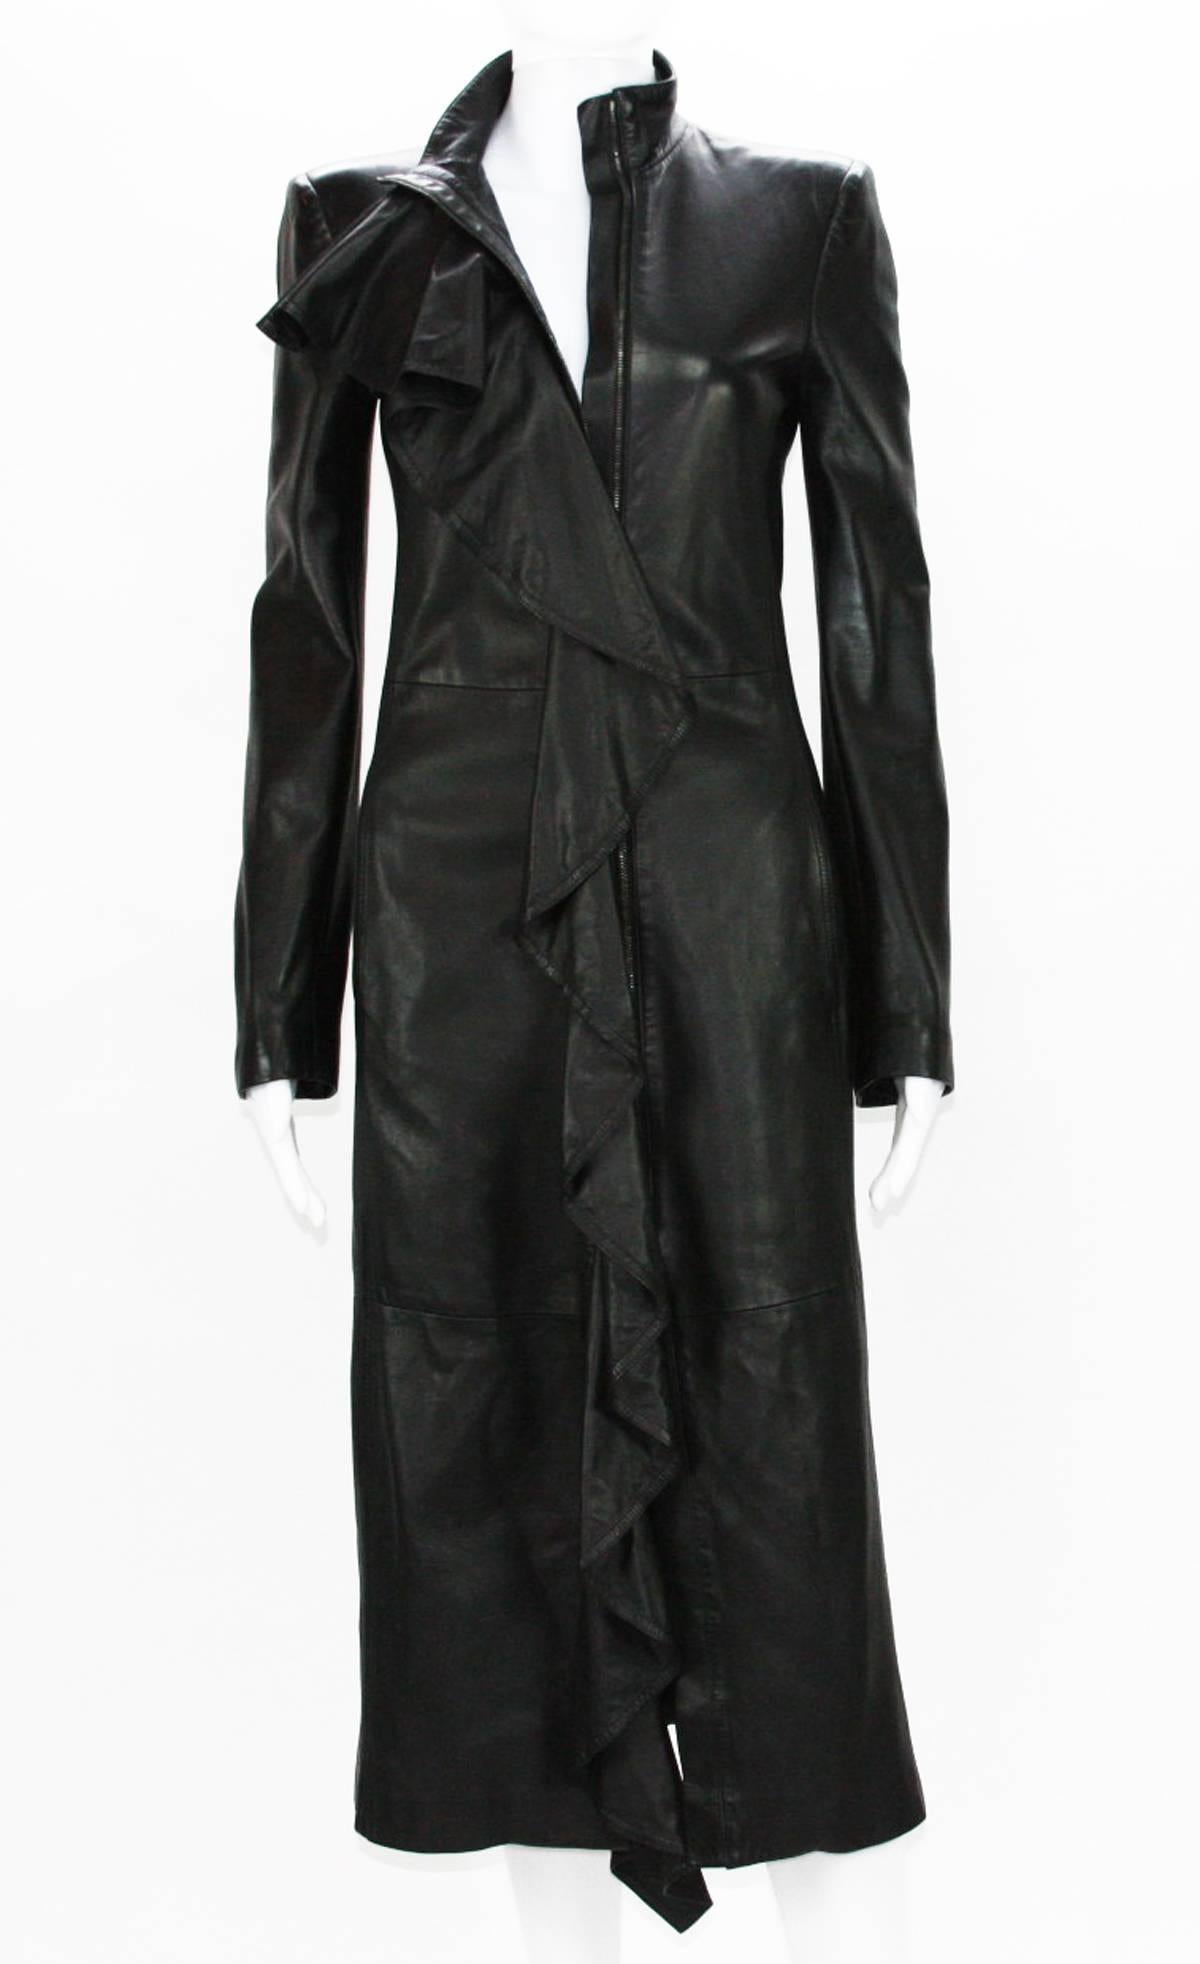 Women's TOM FORD for YVES SAINT LAURENT F/W 2003 Black Leather Ruffle Coat Fr.36 US 4